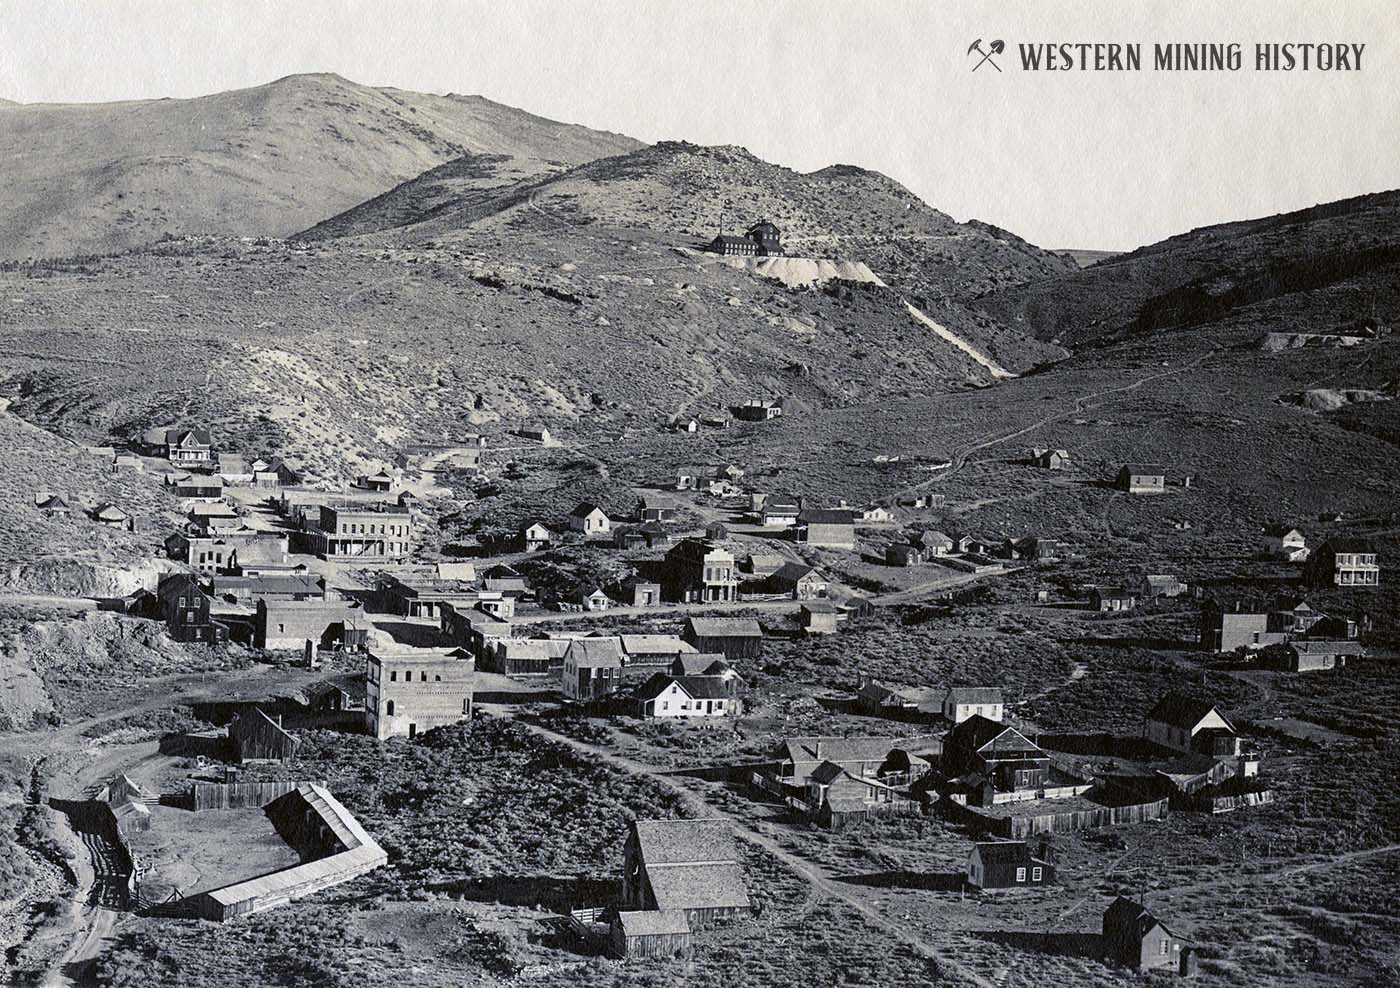 Aurora, Nevada ca. 1870s